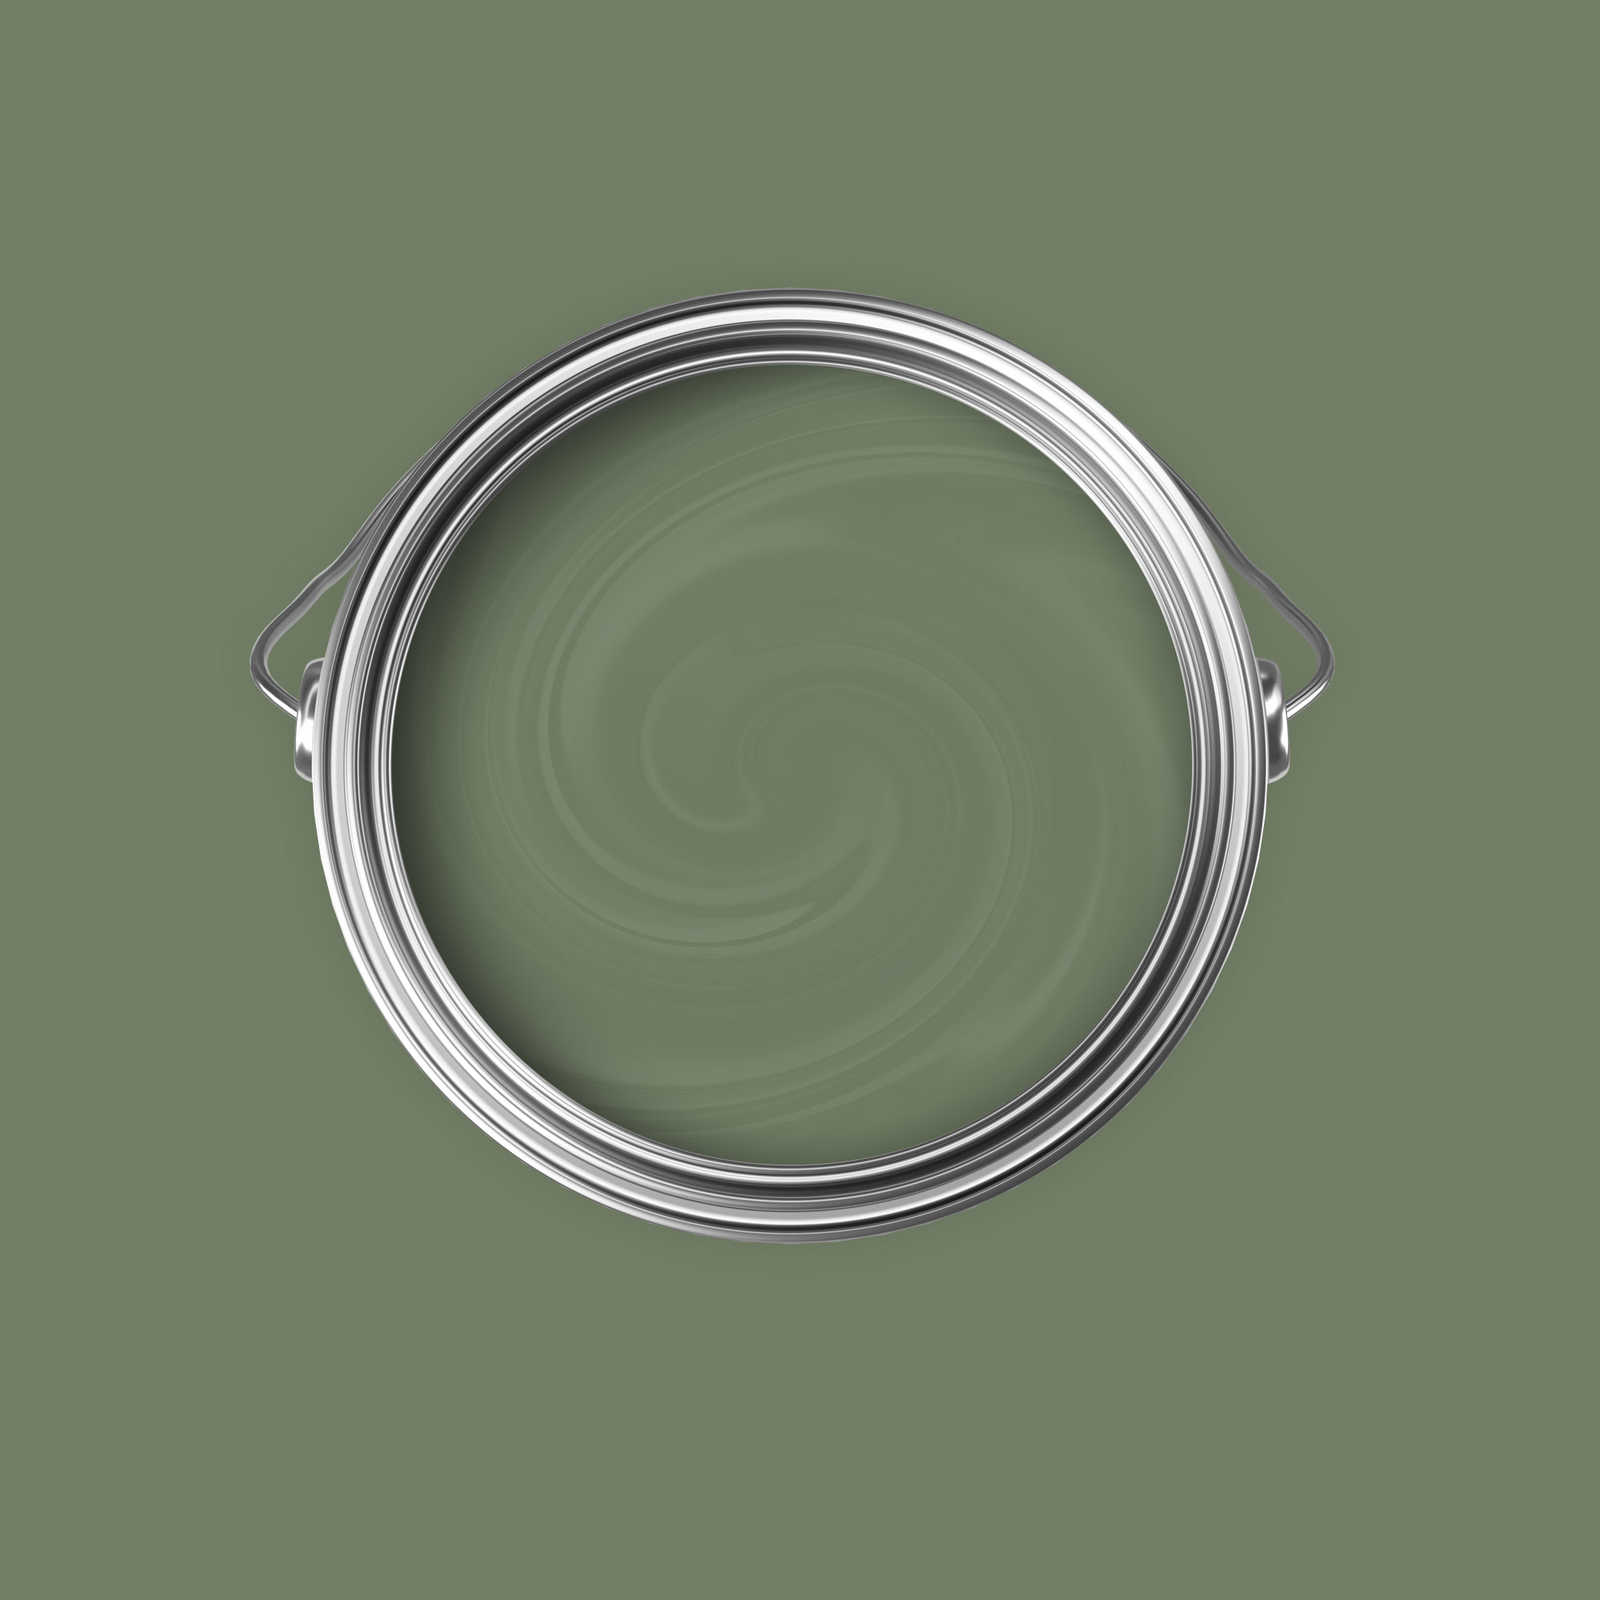             Pittura murale Premium Verde oliva rilassante »Gorgeous Green« NW504 – 5 litri
        